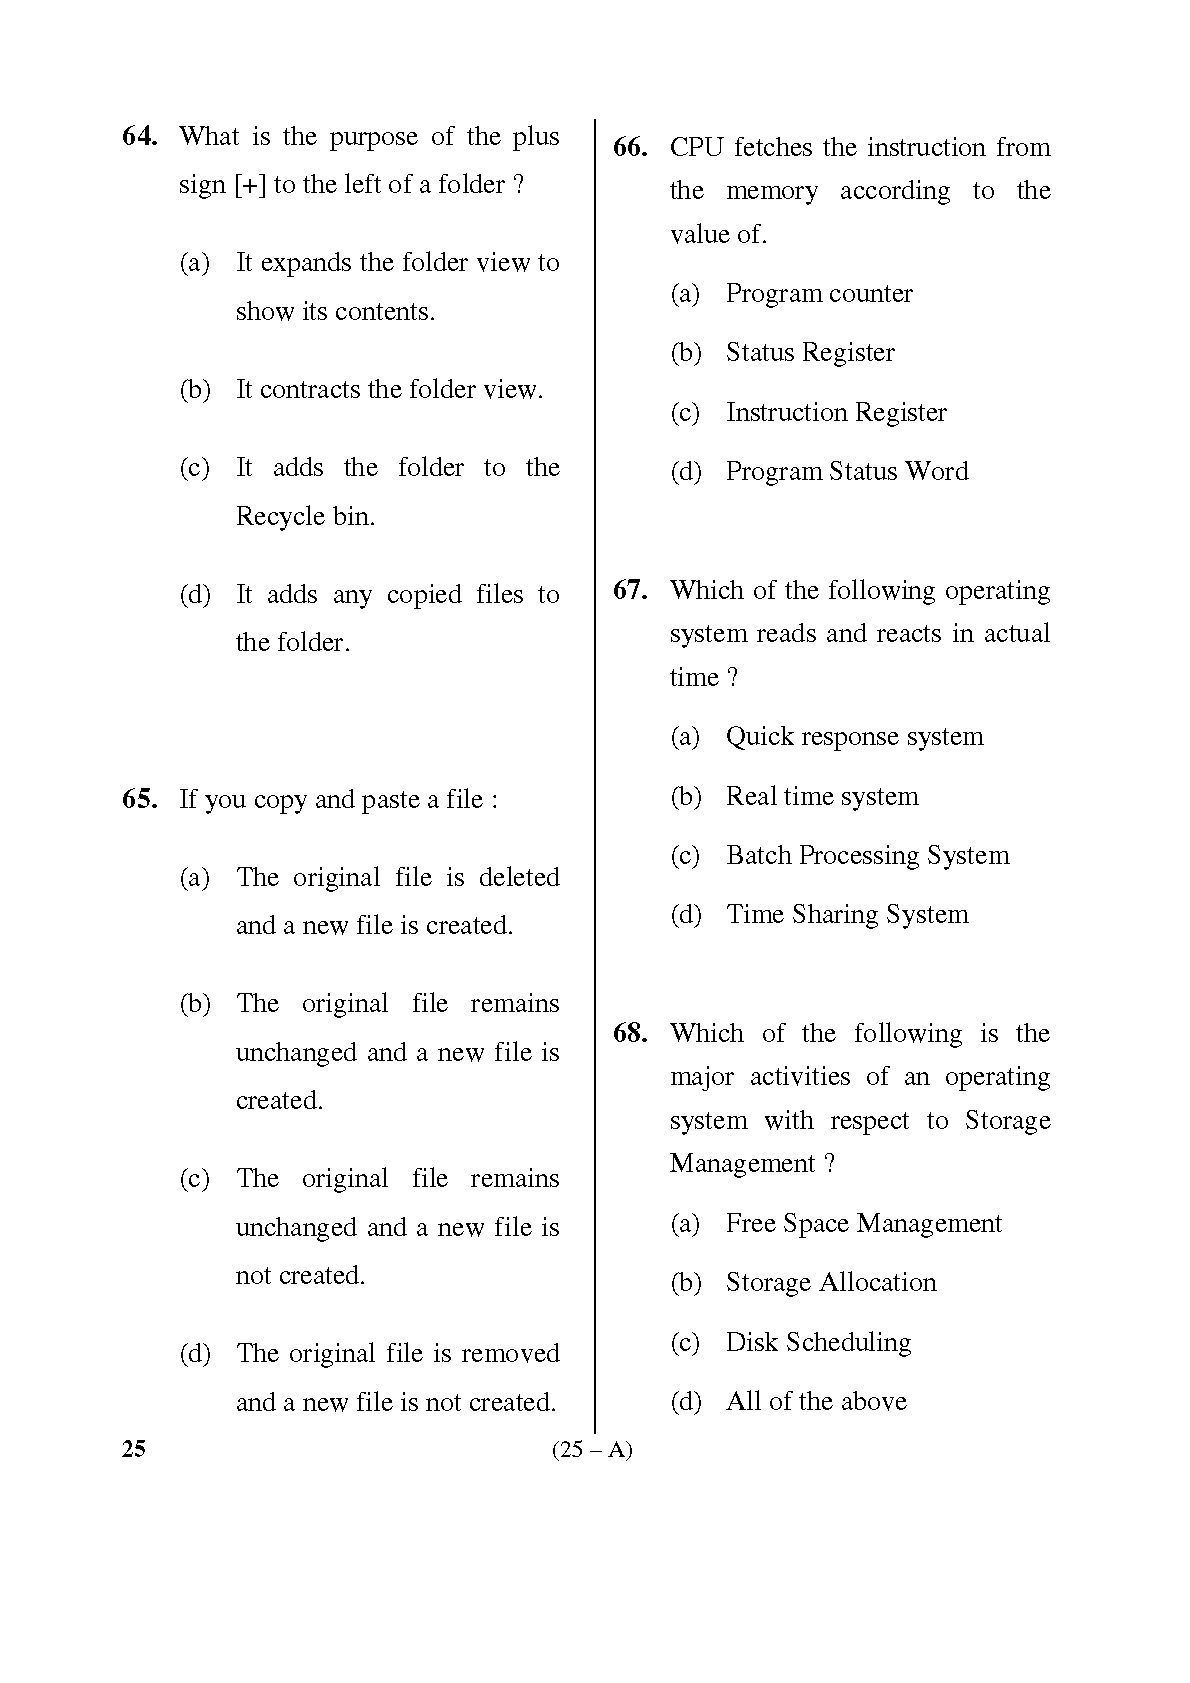 Karnataka PSC Computer Science Teachers Exam Sample Question Paper Subject code 25 25